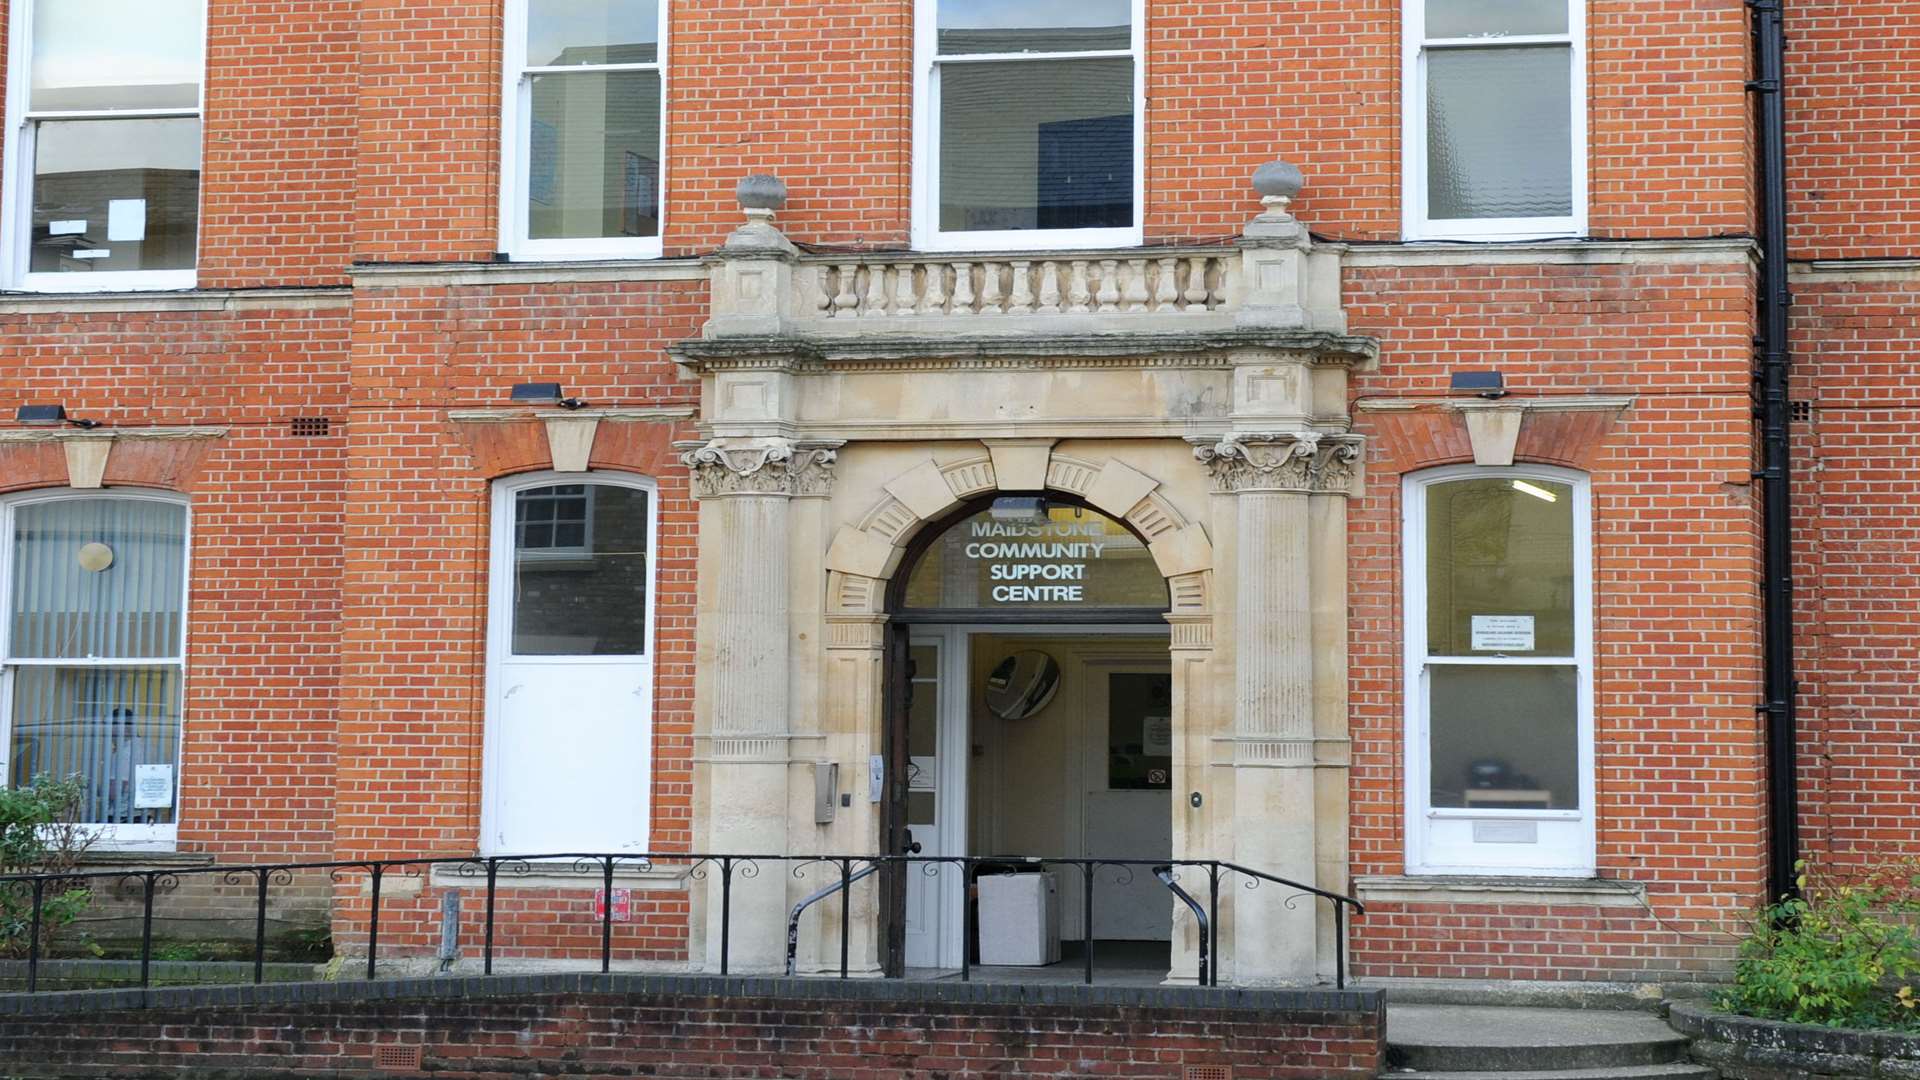 Maidstone Community Support Centre in Marsham Street